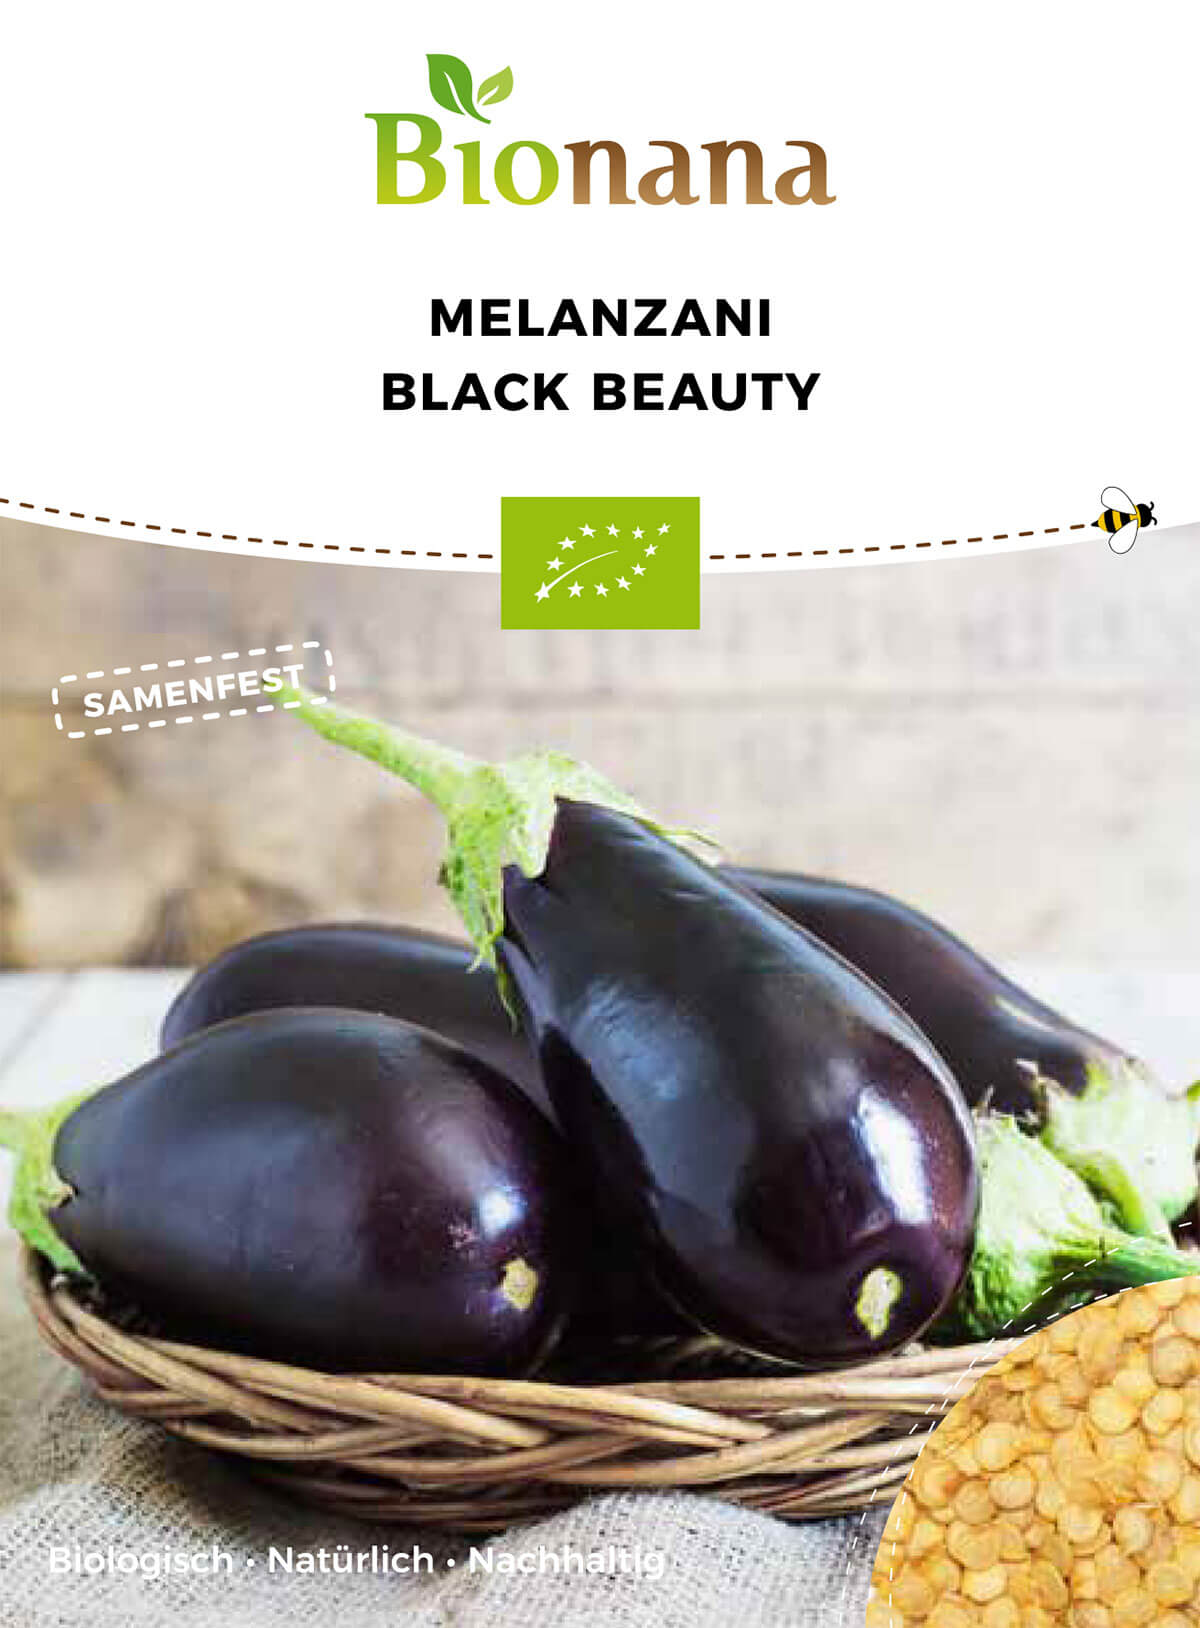 Aubergine Black Beauty | BIO Auberginensamen von Bionana